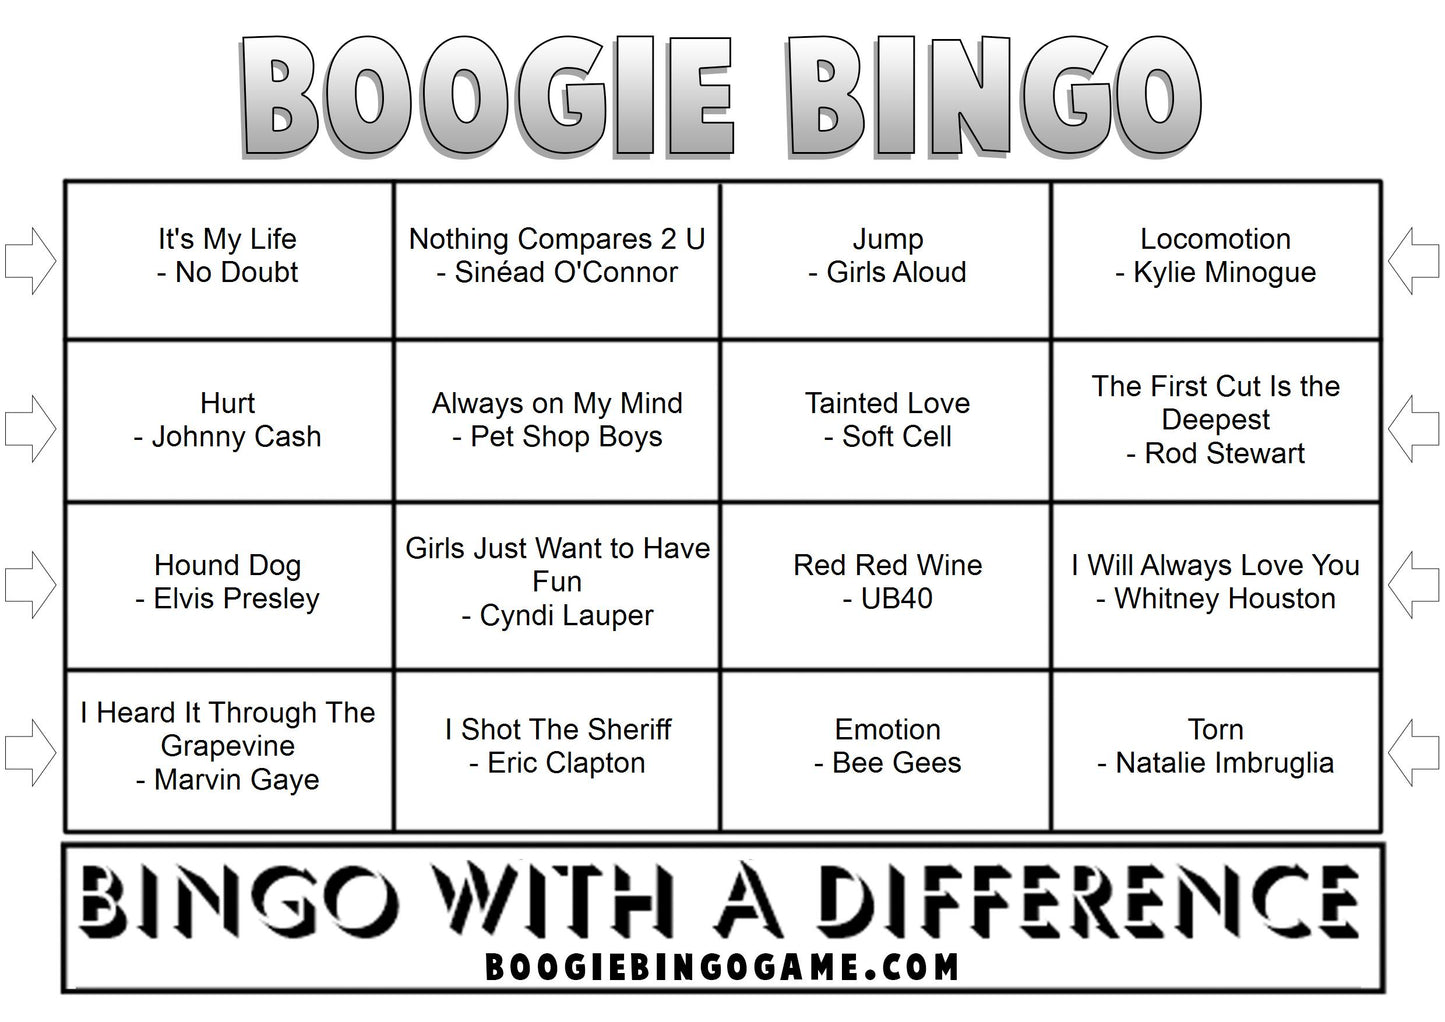 Game 67 | Cover Versions | Boogie Bingo | Printable Music Bingo Tickets